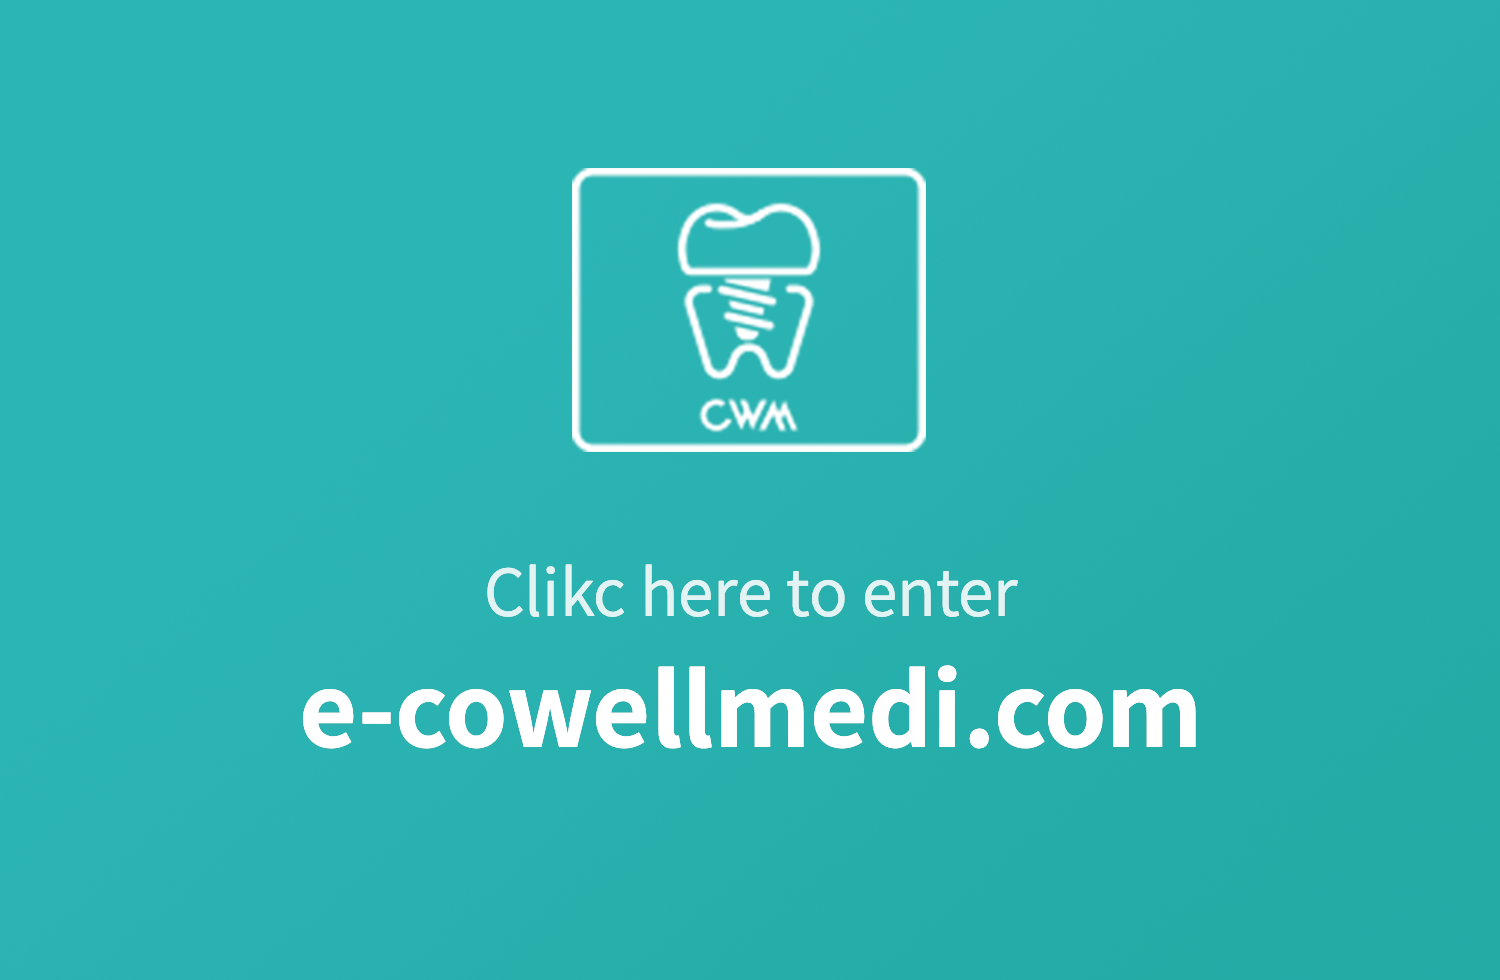 e-cowellmedi.com | 다양한 임상을 만나실 수 있습니다.